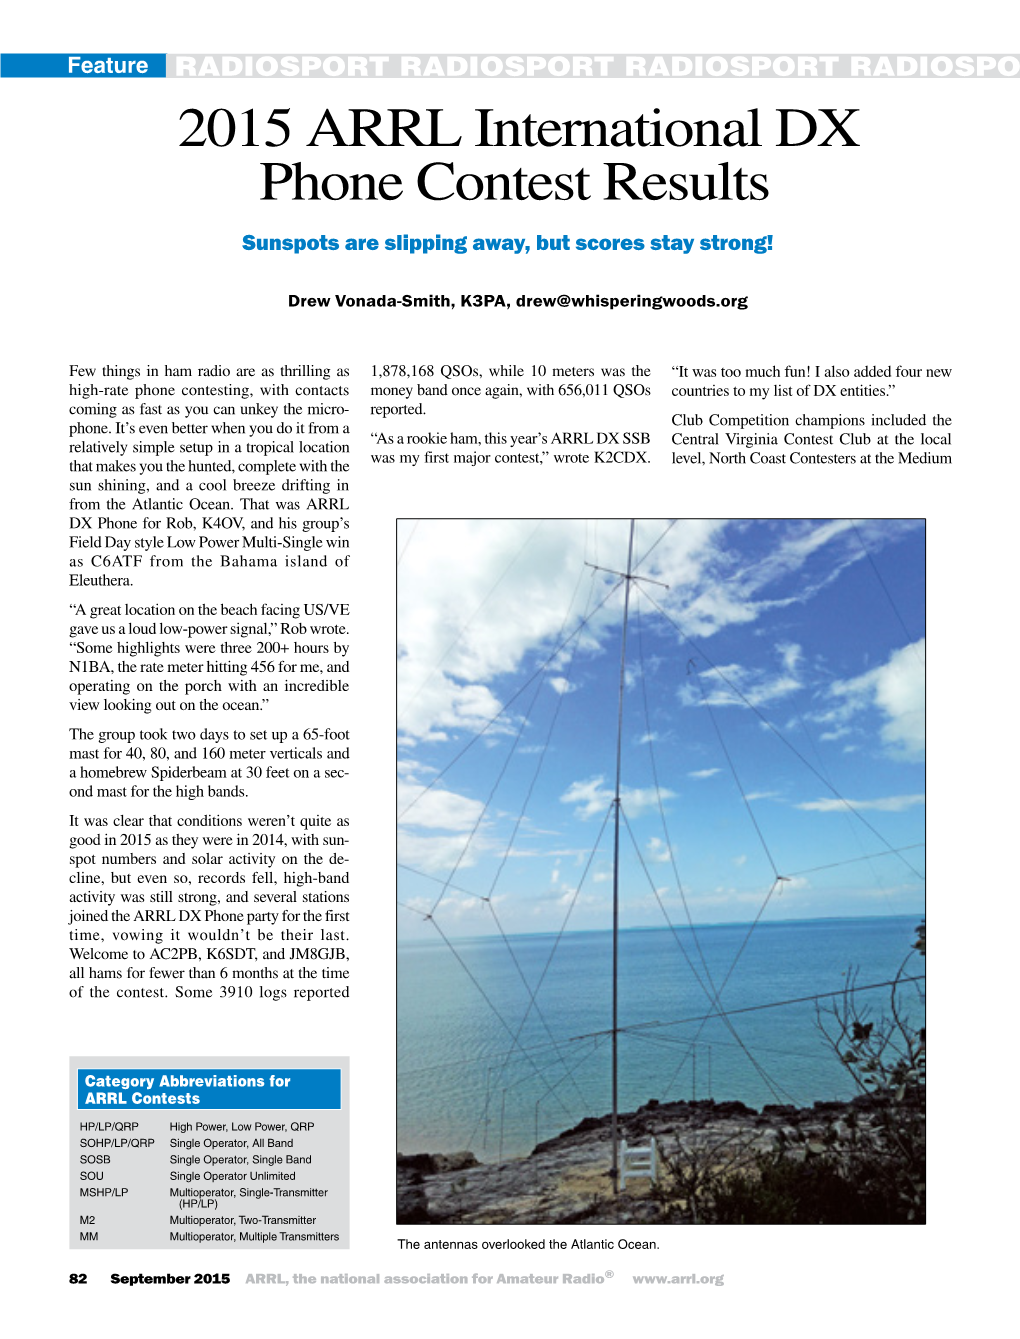 2015 ARRL International DX Phone Contest Results